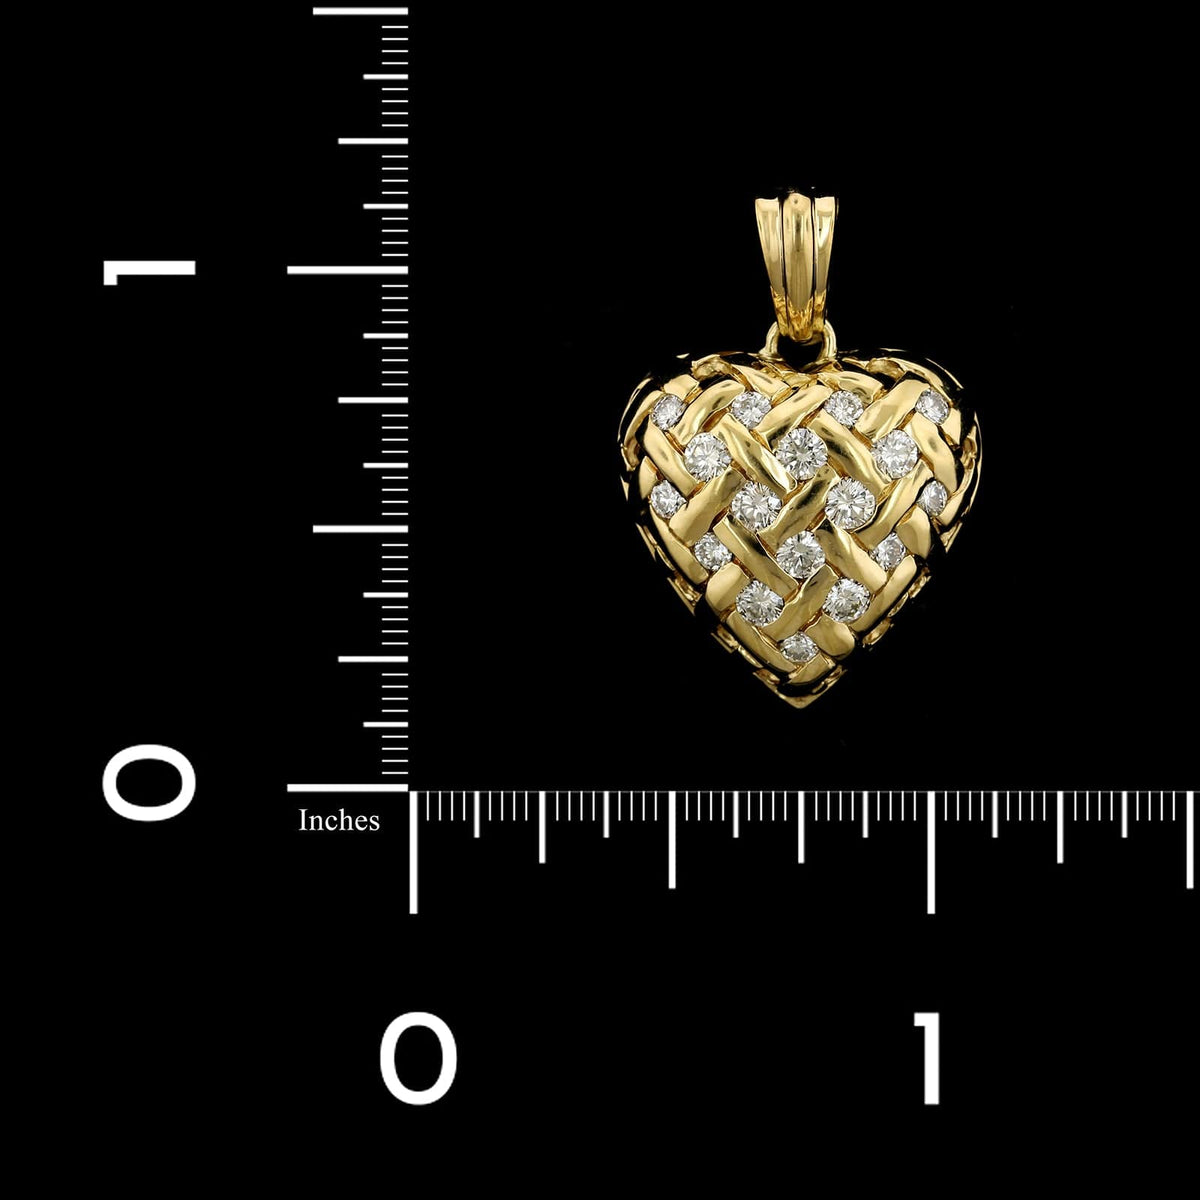 18K Yellow Gold Estate Diamond Heart Pendant Enhancer